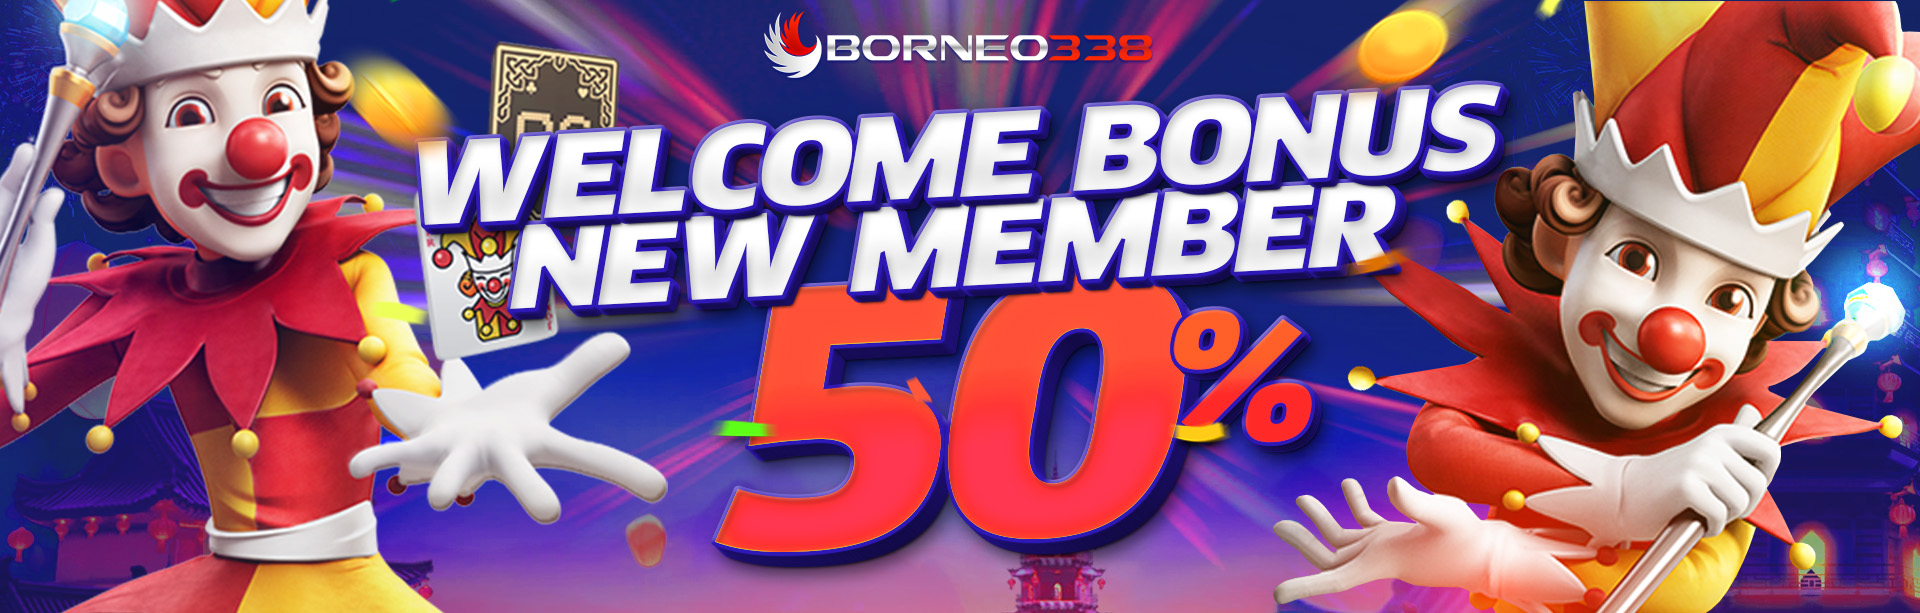 Welcome Bonus Borneo338